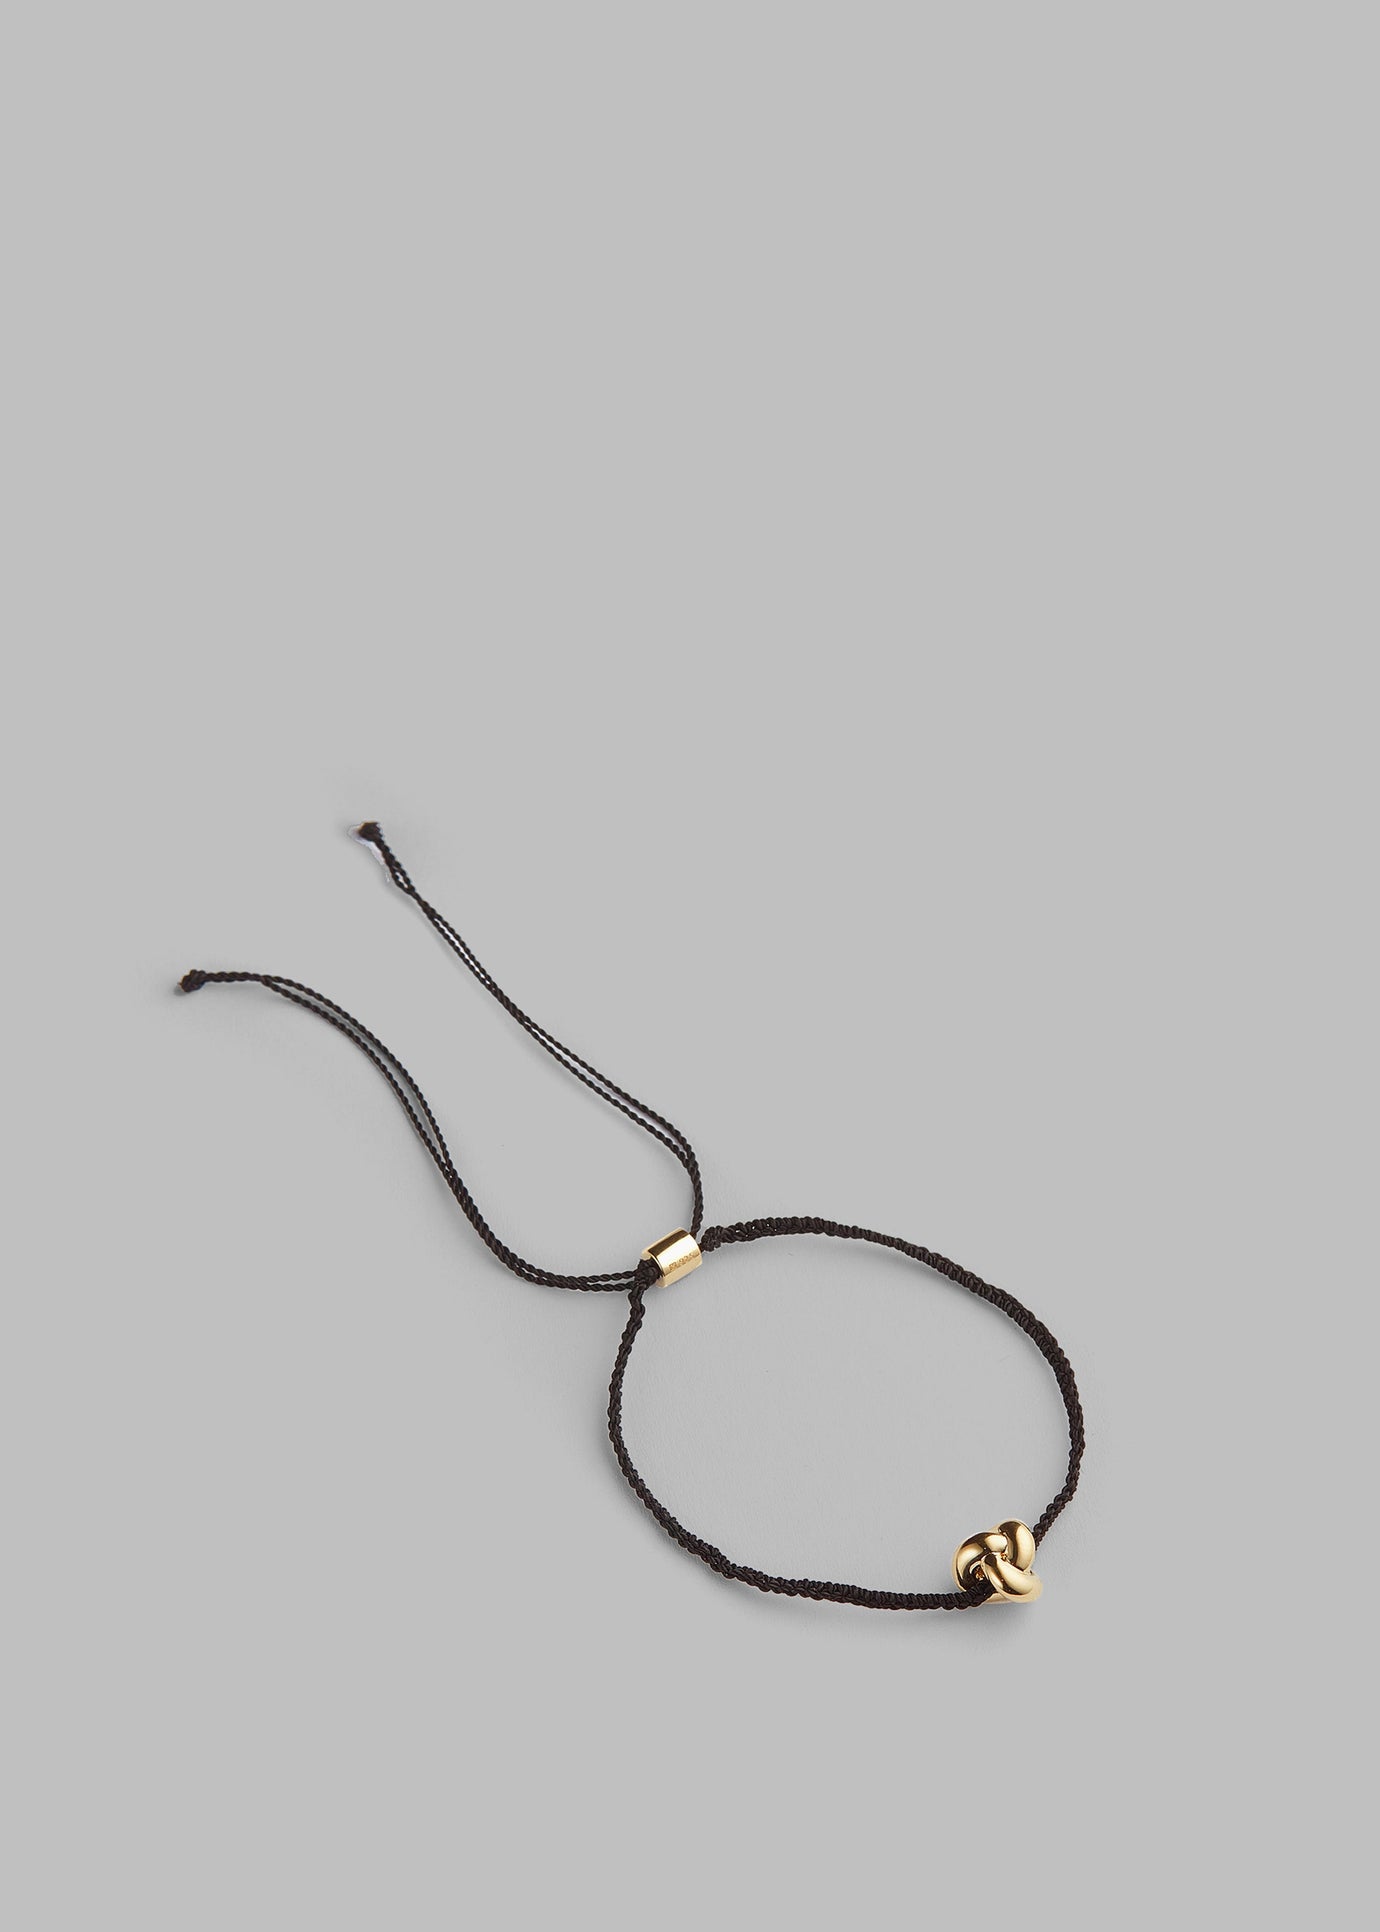 Otiumberg Knot Cord Bracelet - Gold Vermeil